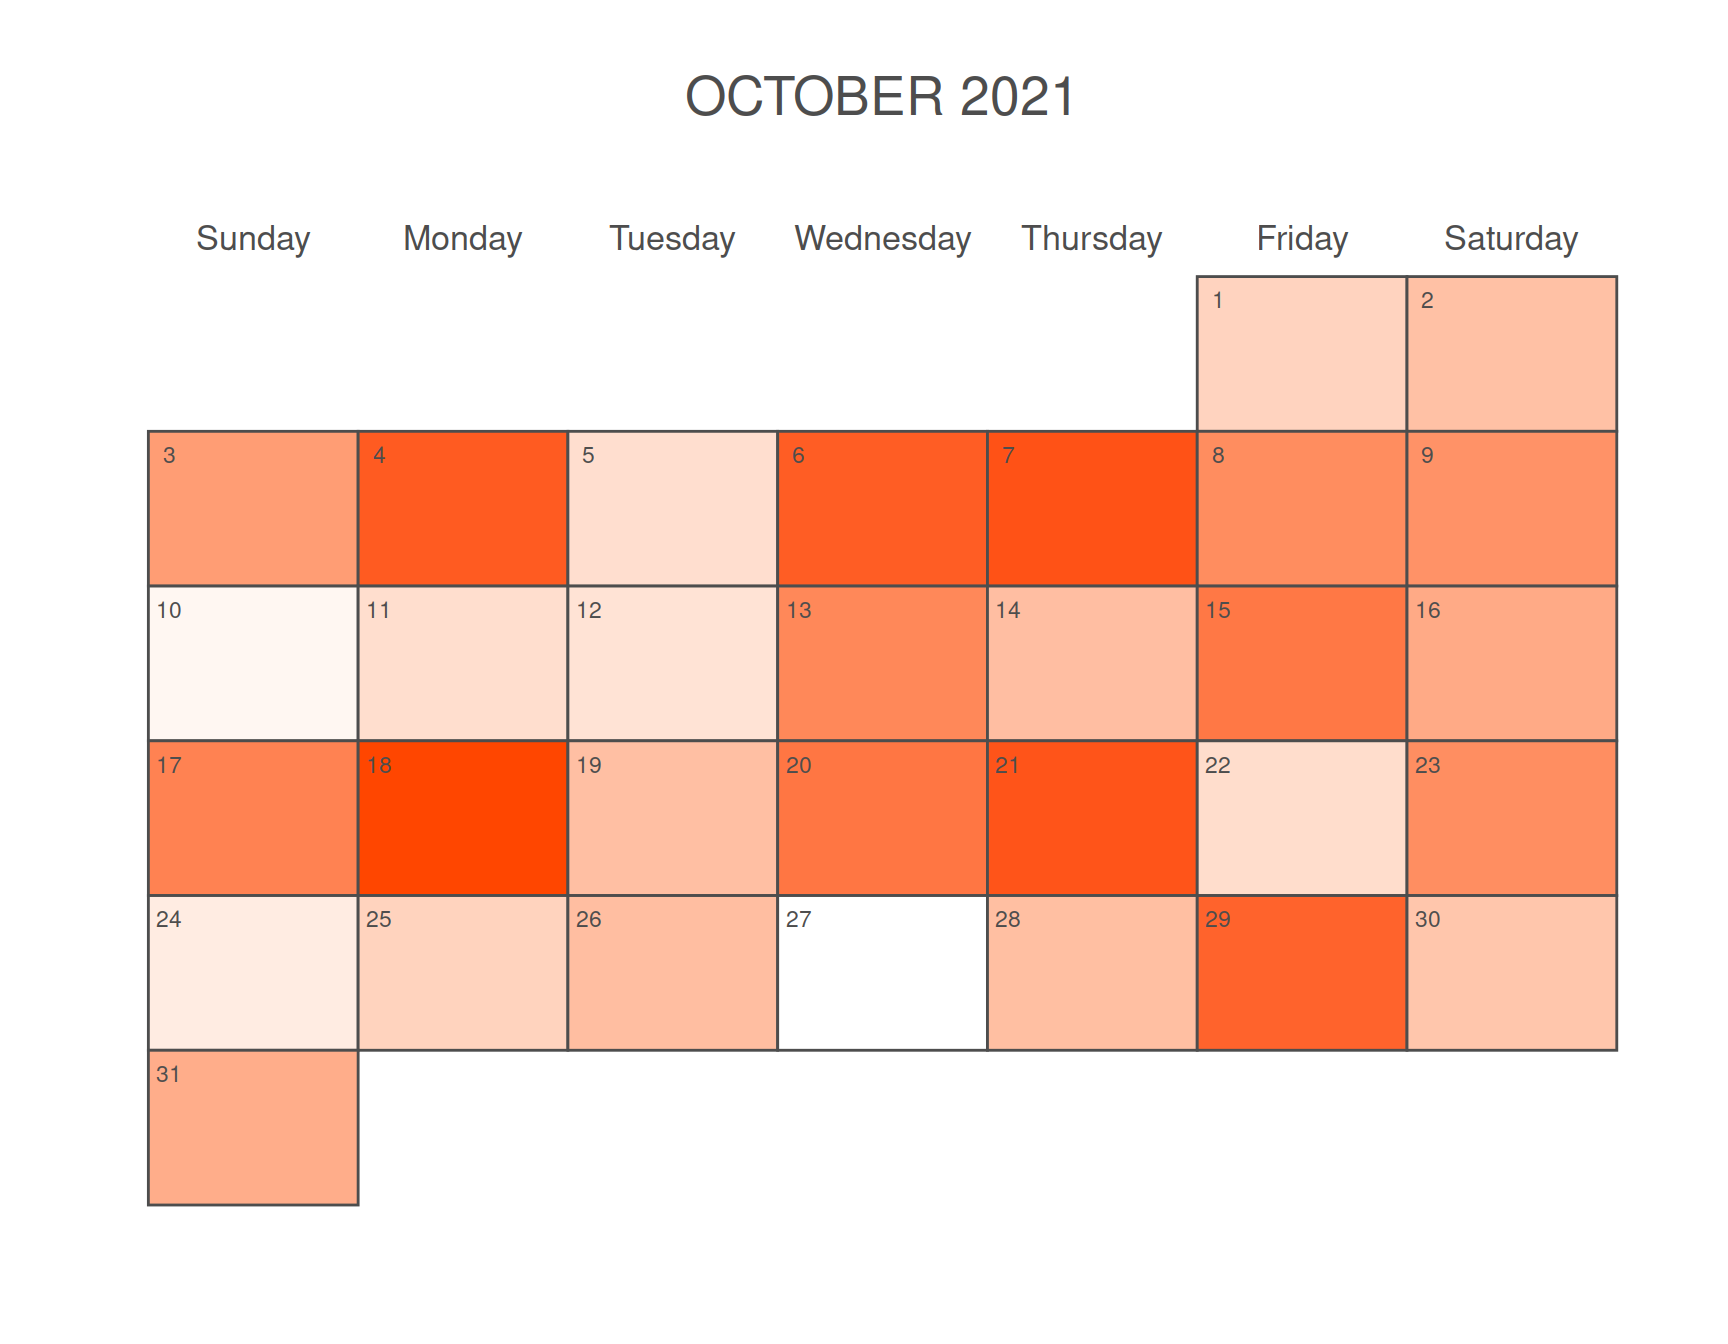 Monthly calendar as a heatmap in R